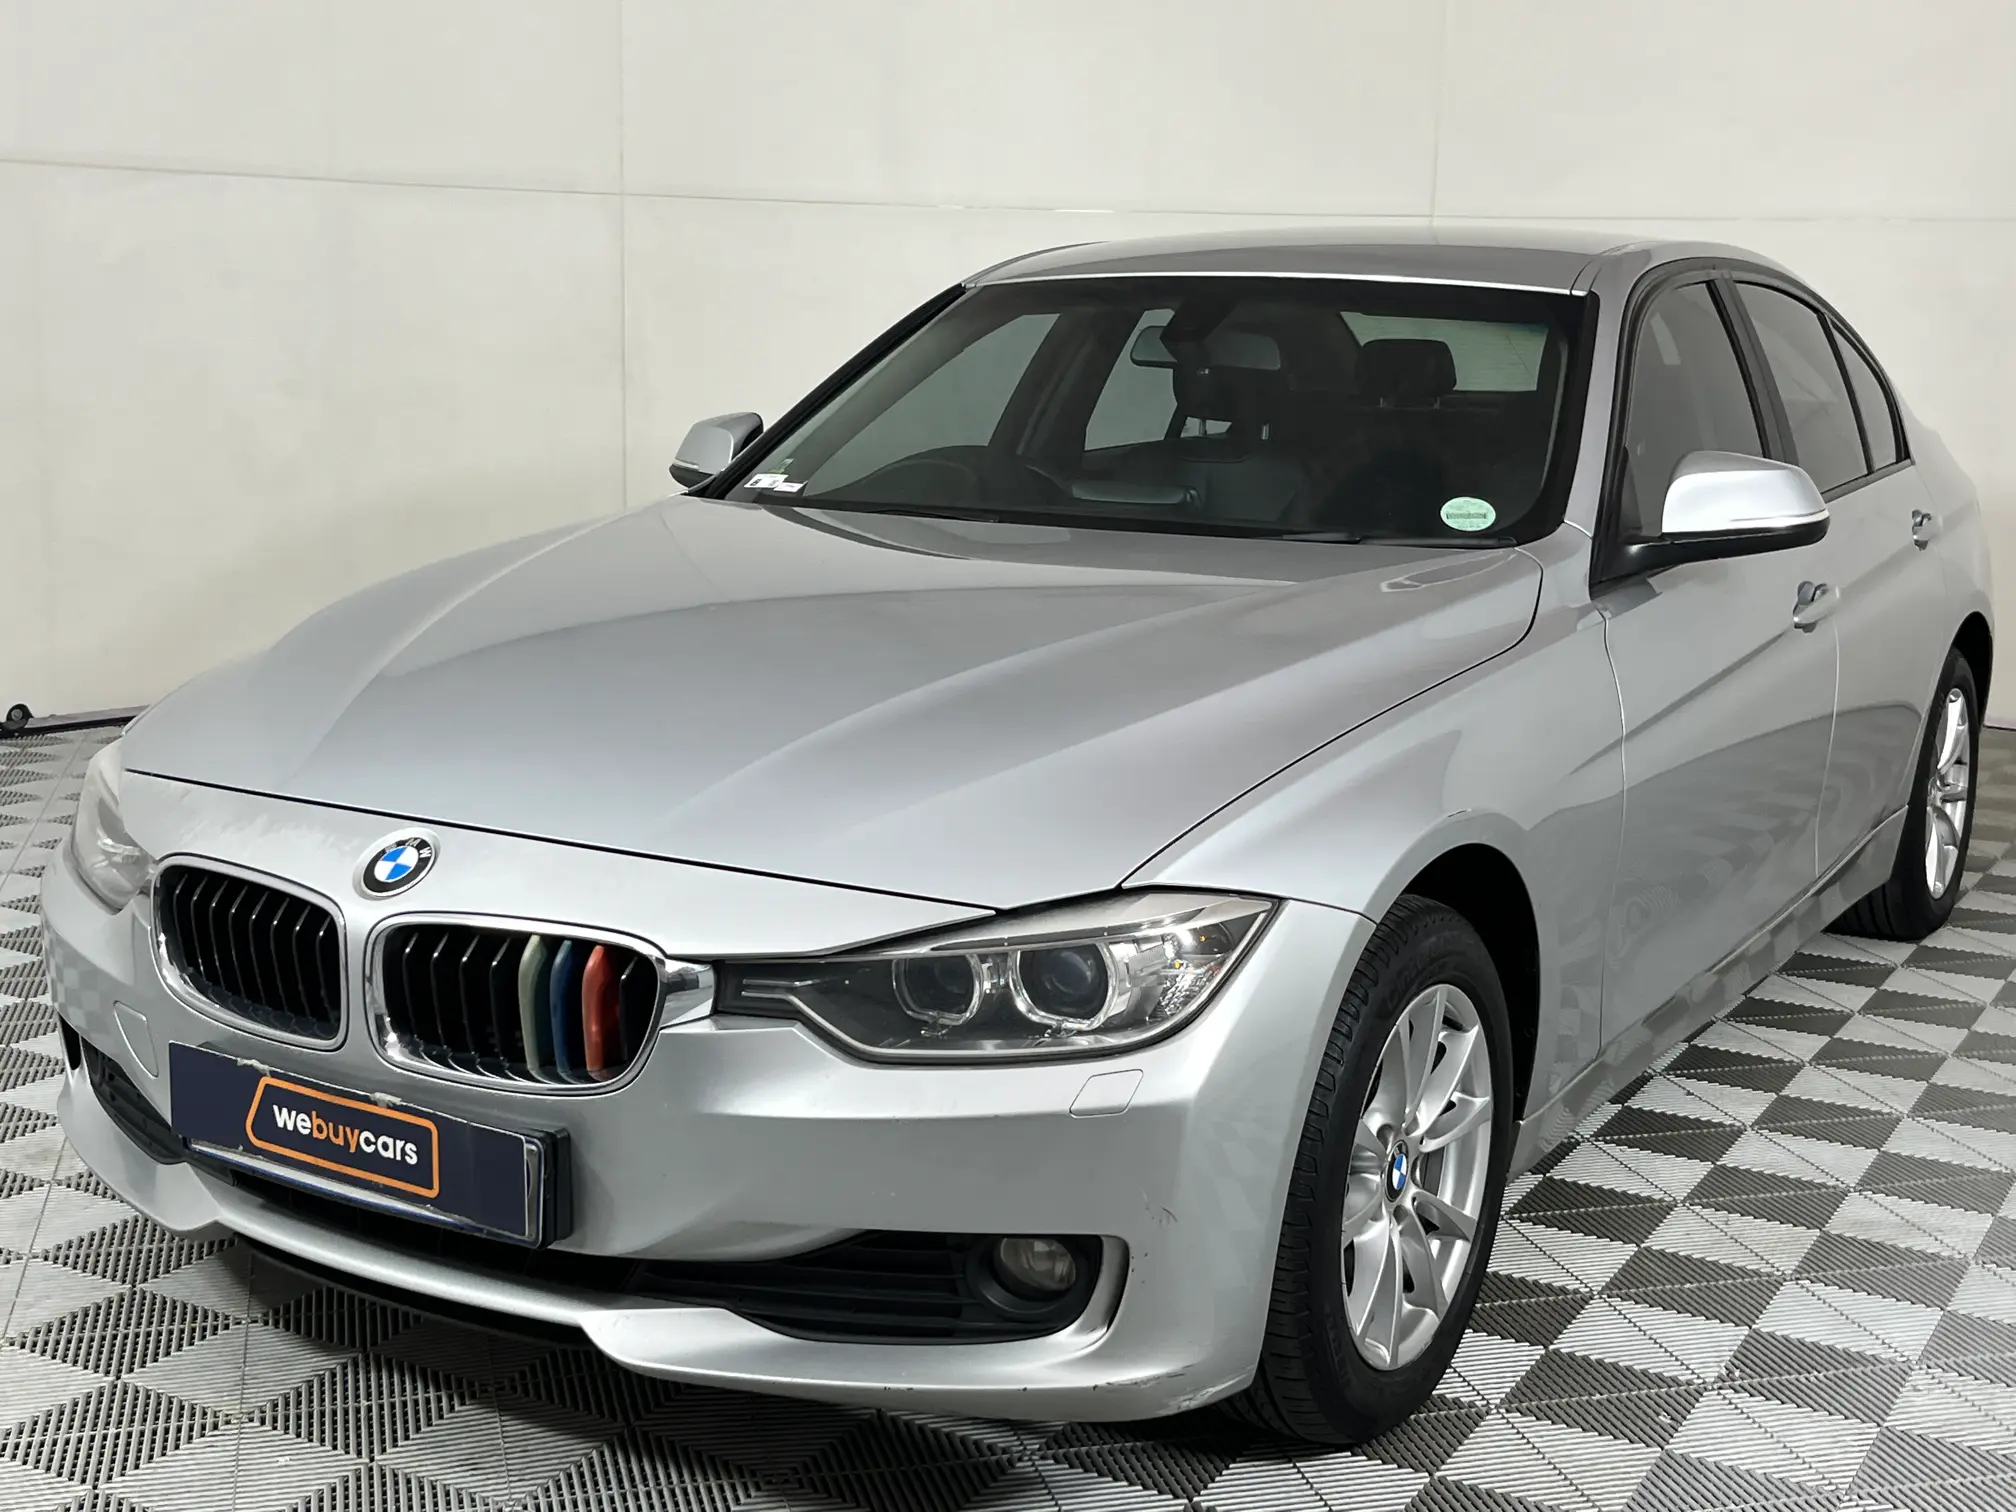 2014 BMW 3 Series 316i Auto (F30)